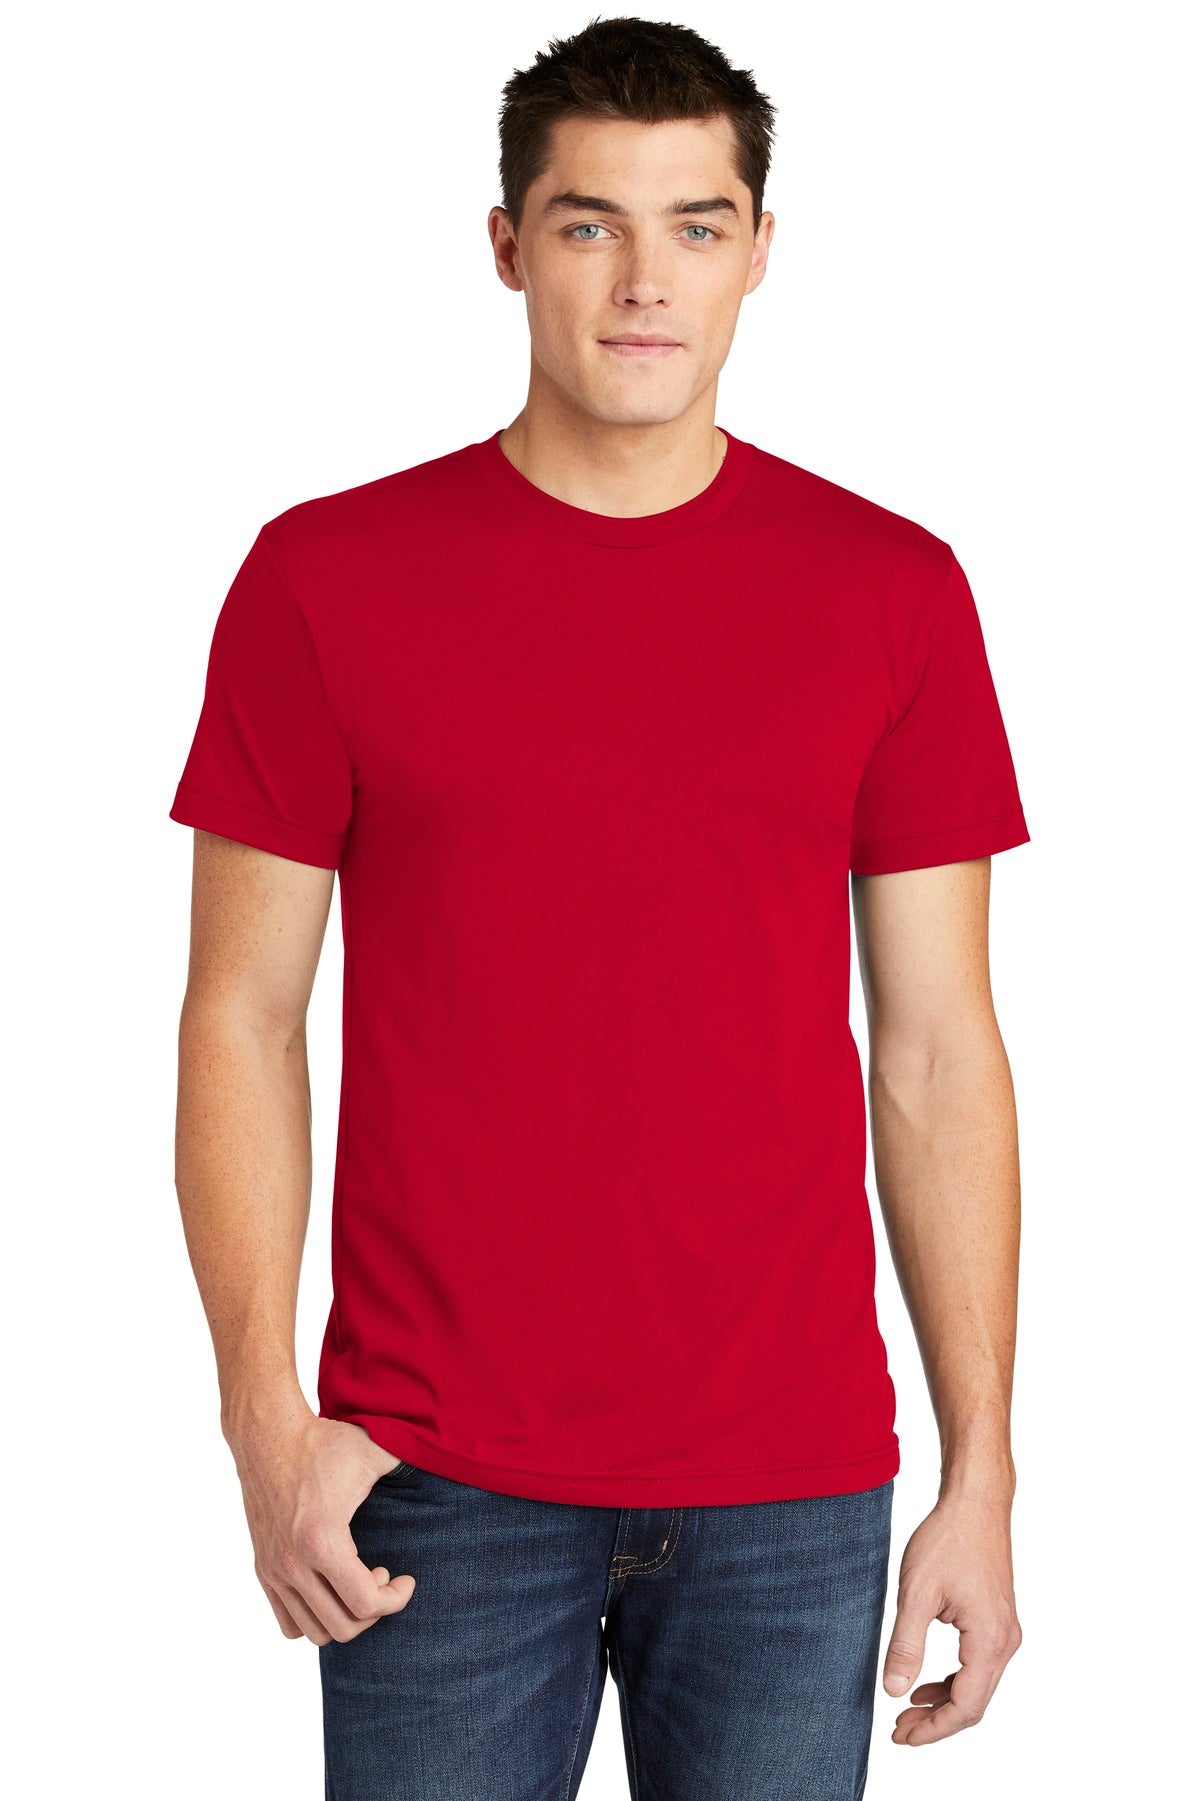 American Apparel ® Poly-Cotton T-Shirt. BB401W